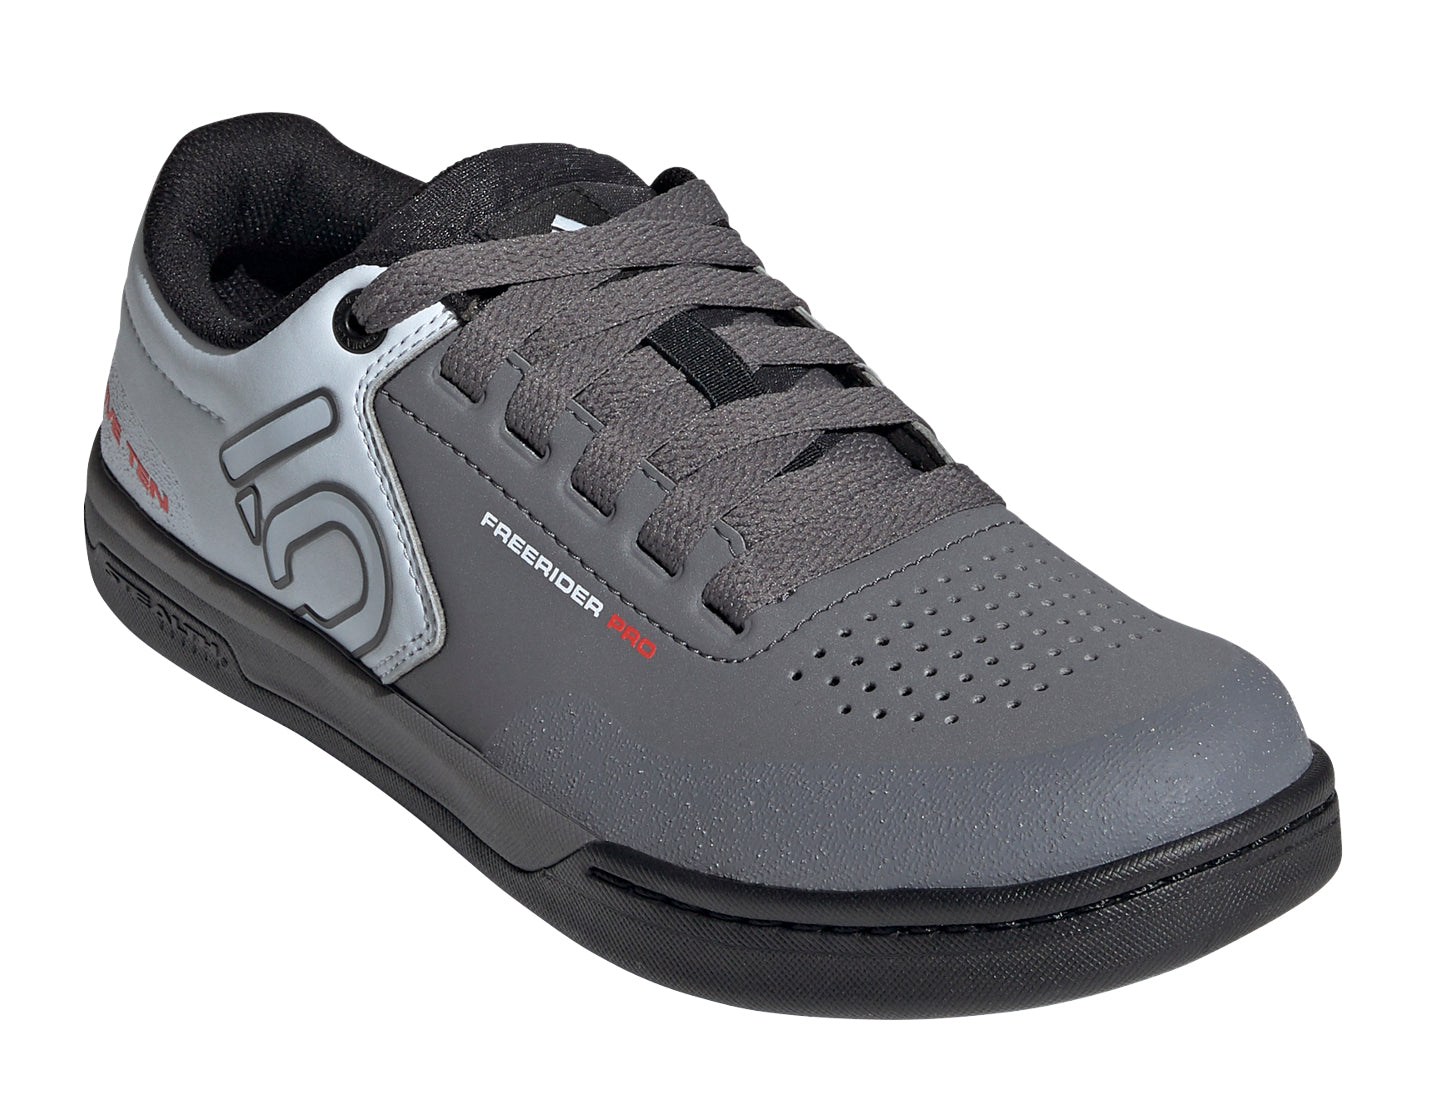 Men's Adidas Five Ten Freerider Pro Biking Shoe in Grey Five/Cloud White/Halo Blue from the front